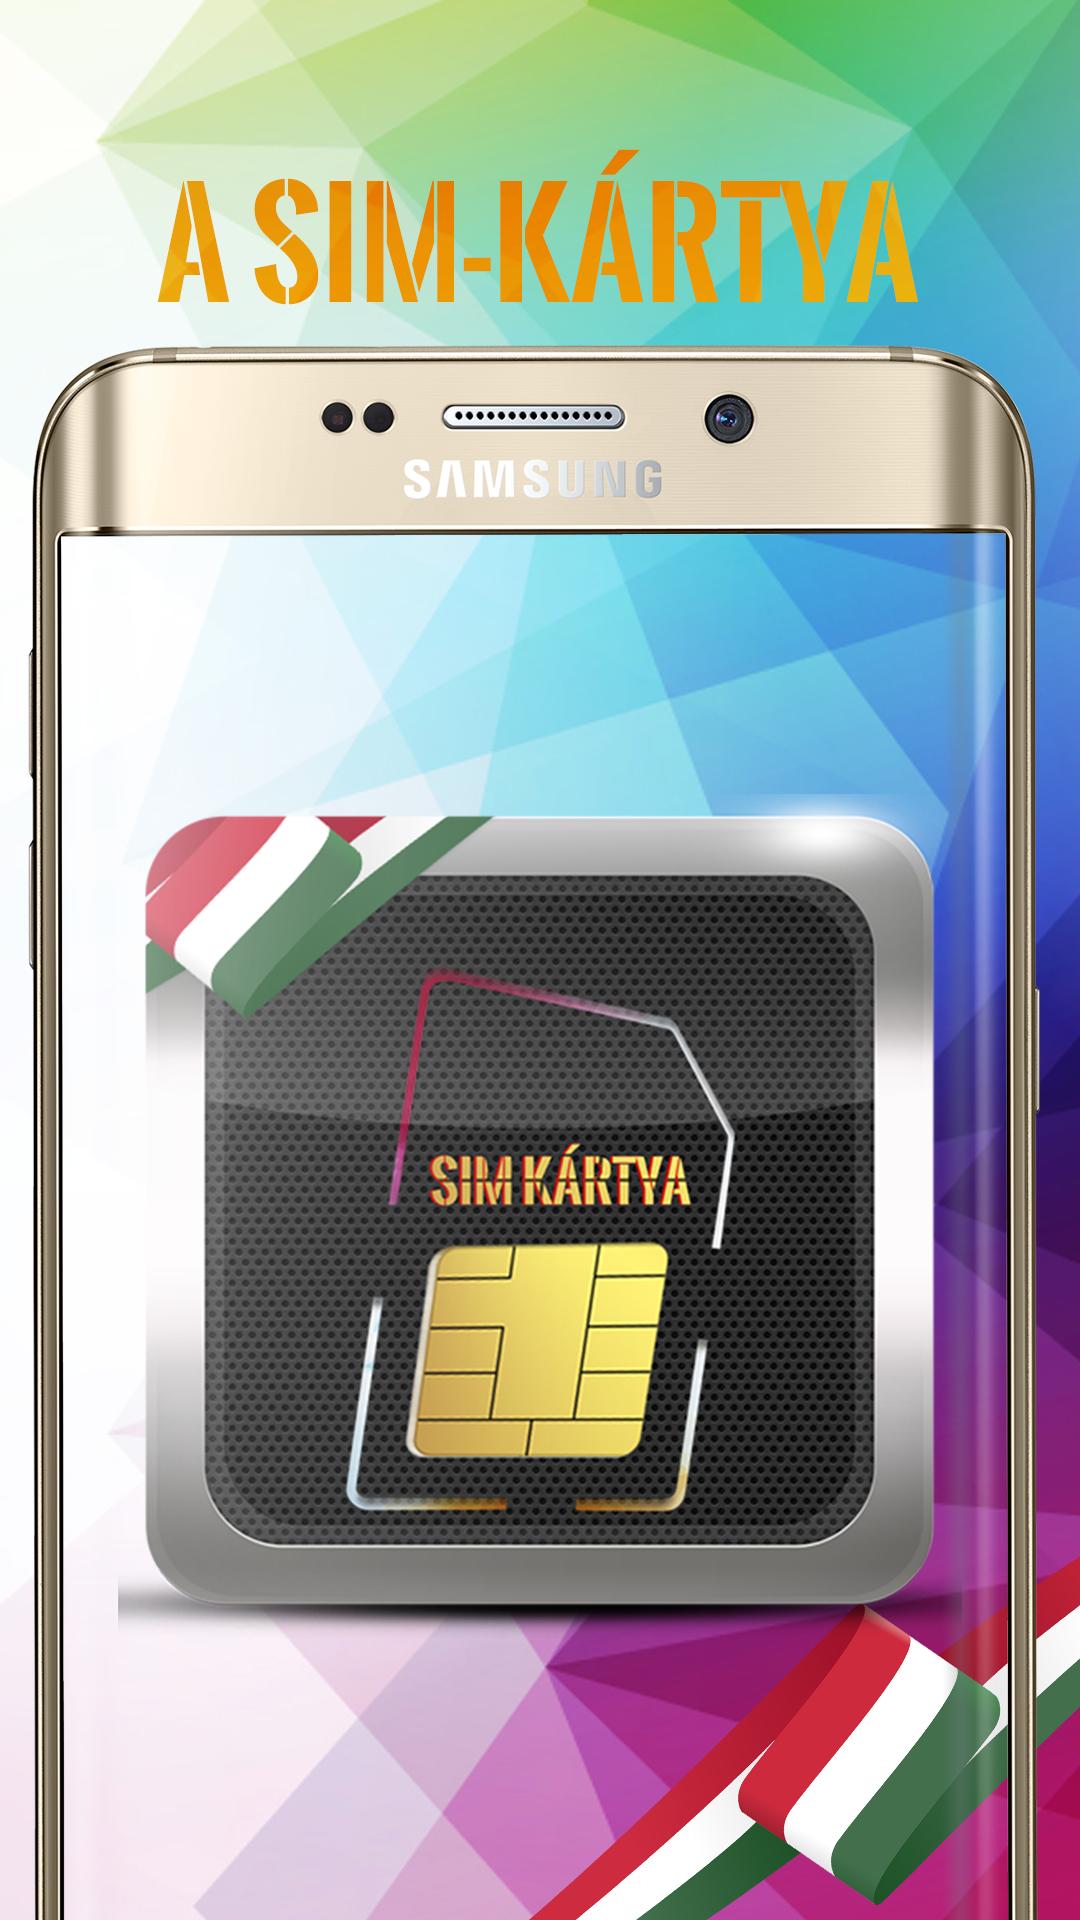 SIM-kártya kezelő adatai APK for Android Download